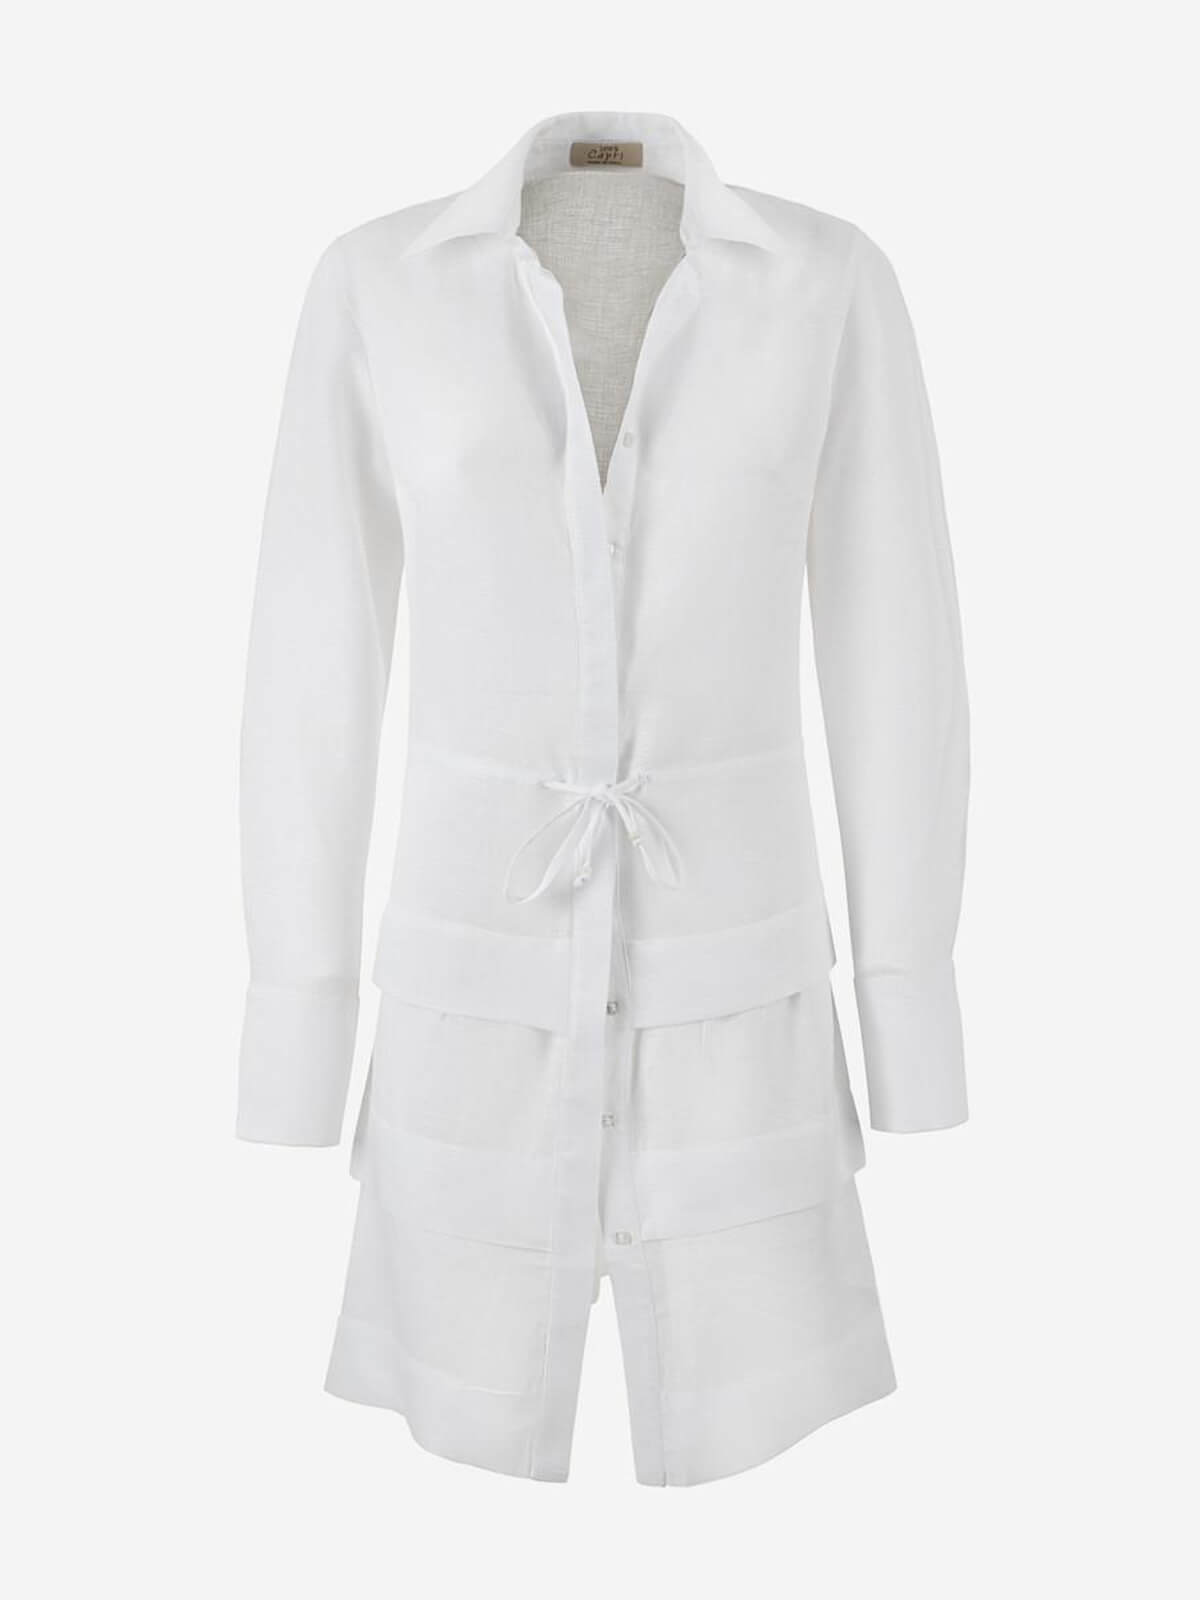 Athina dress white color 100% Capri